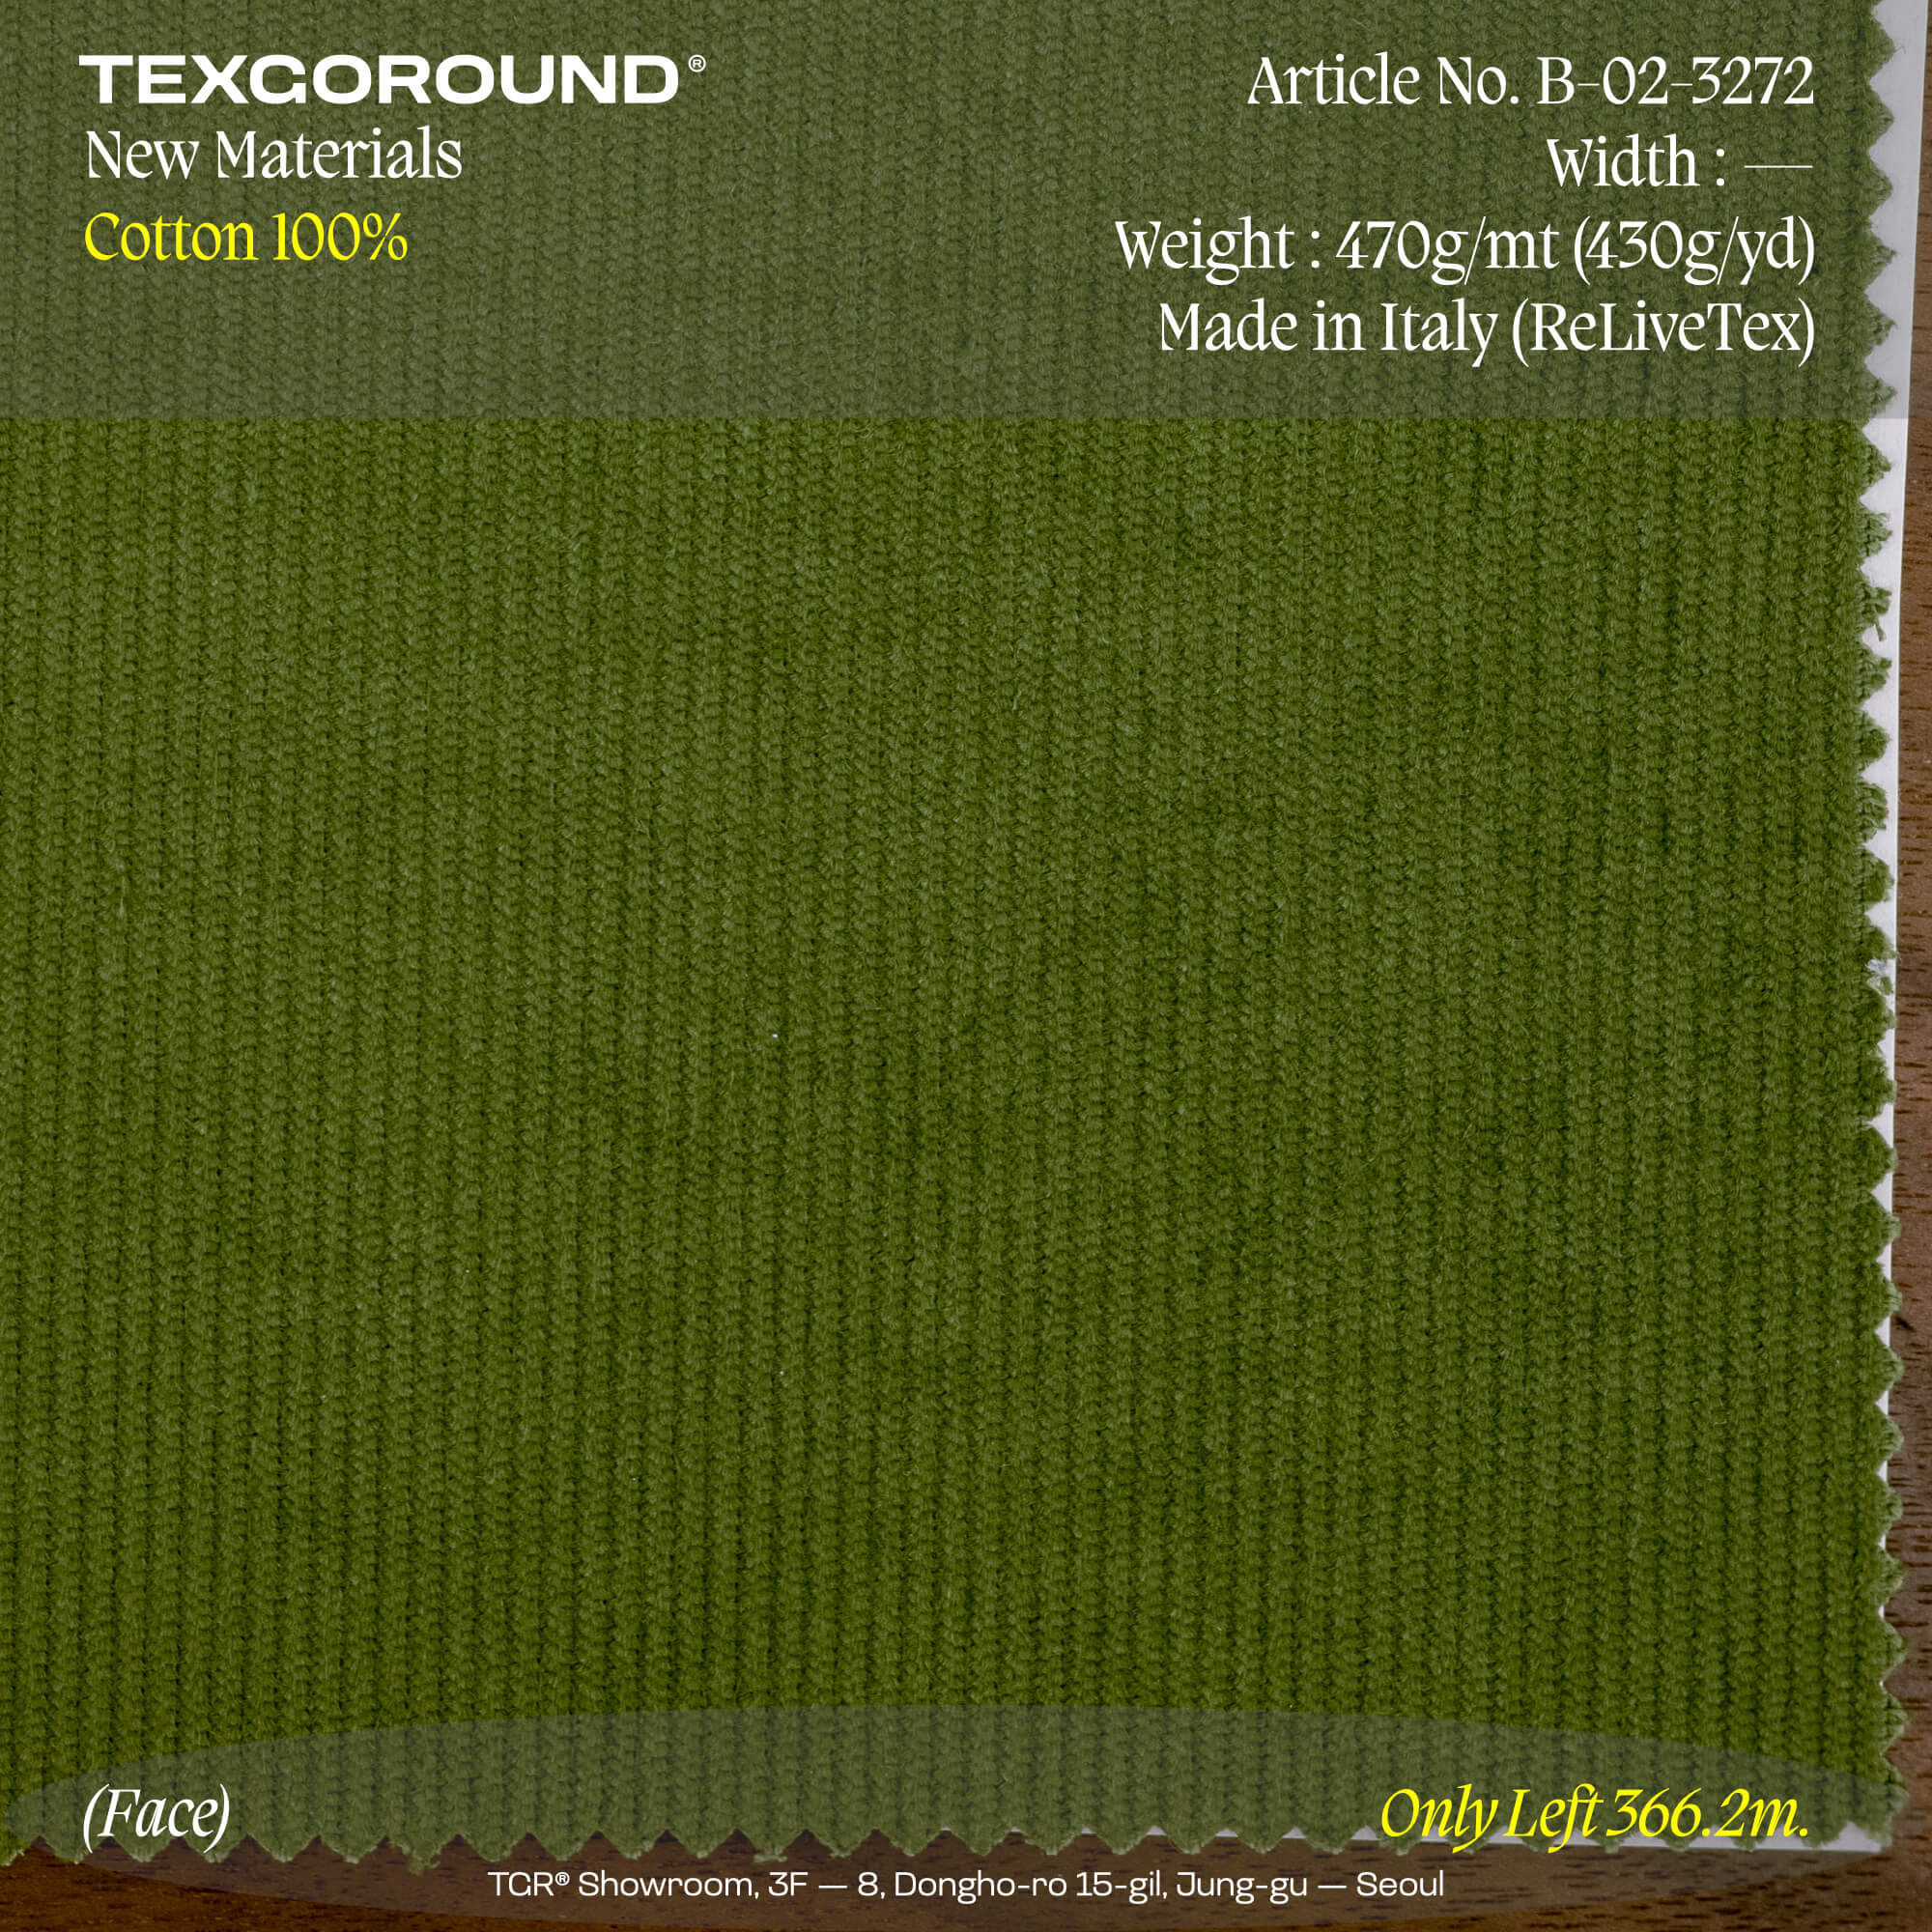 TEXGOROUND® New Materials (5) - Cotton 100%